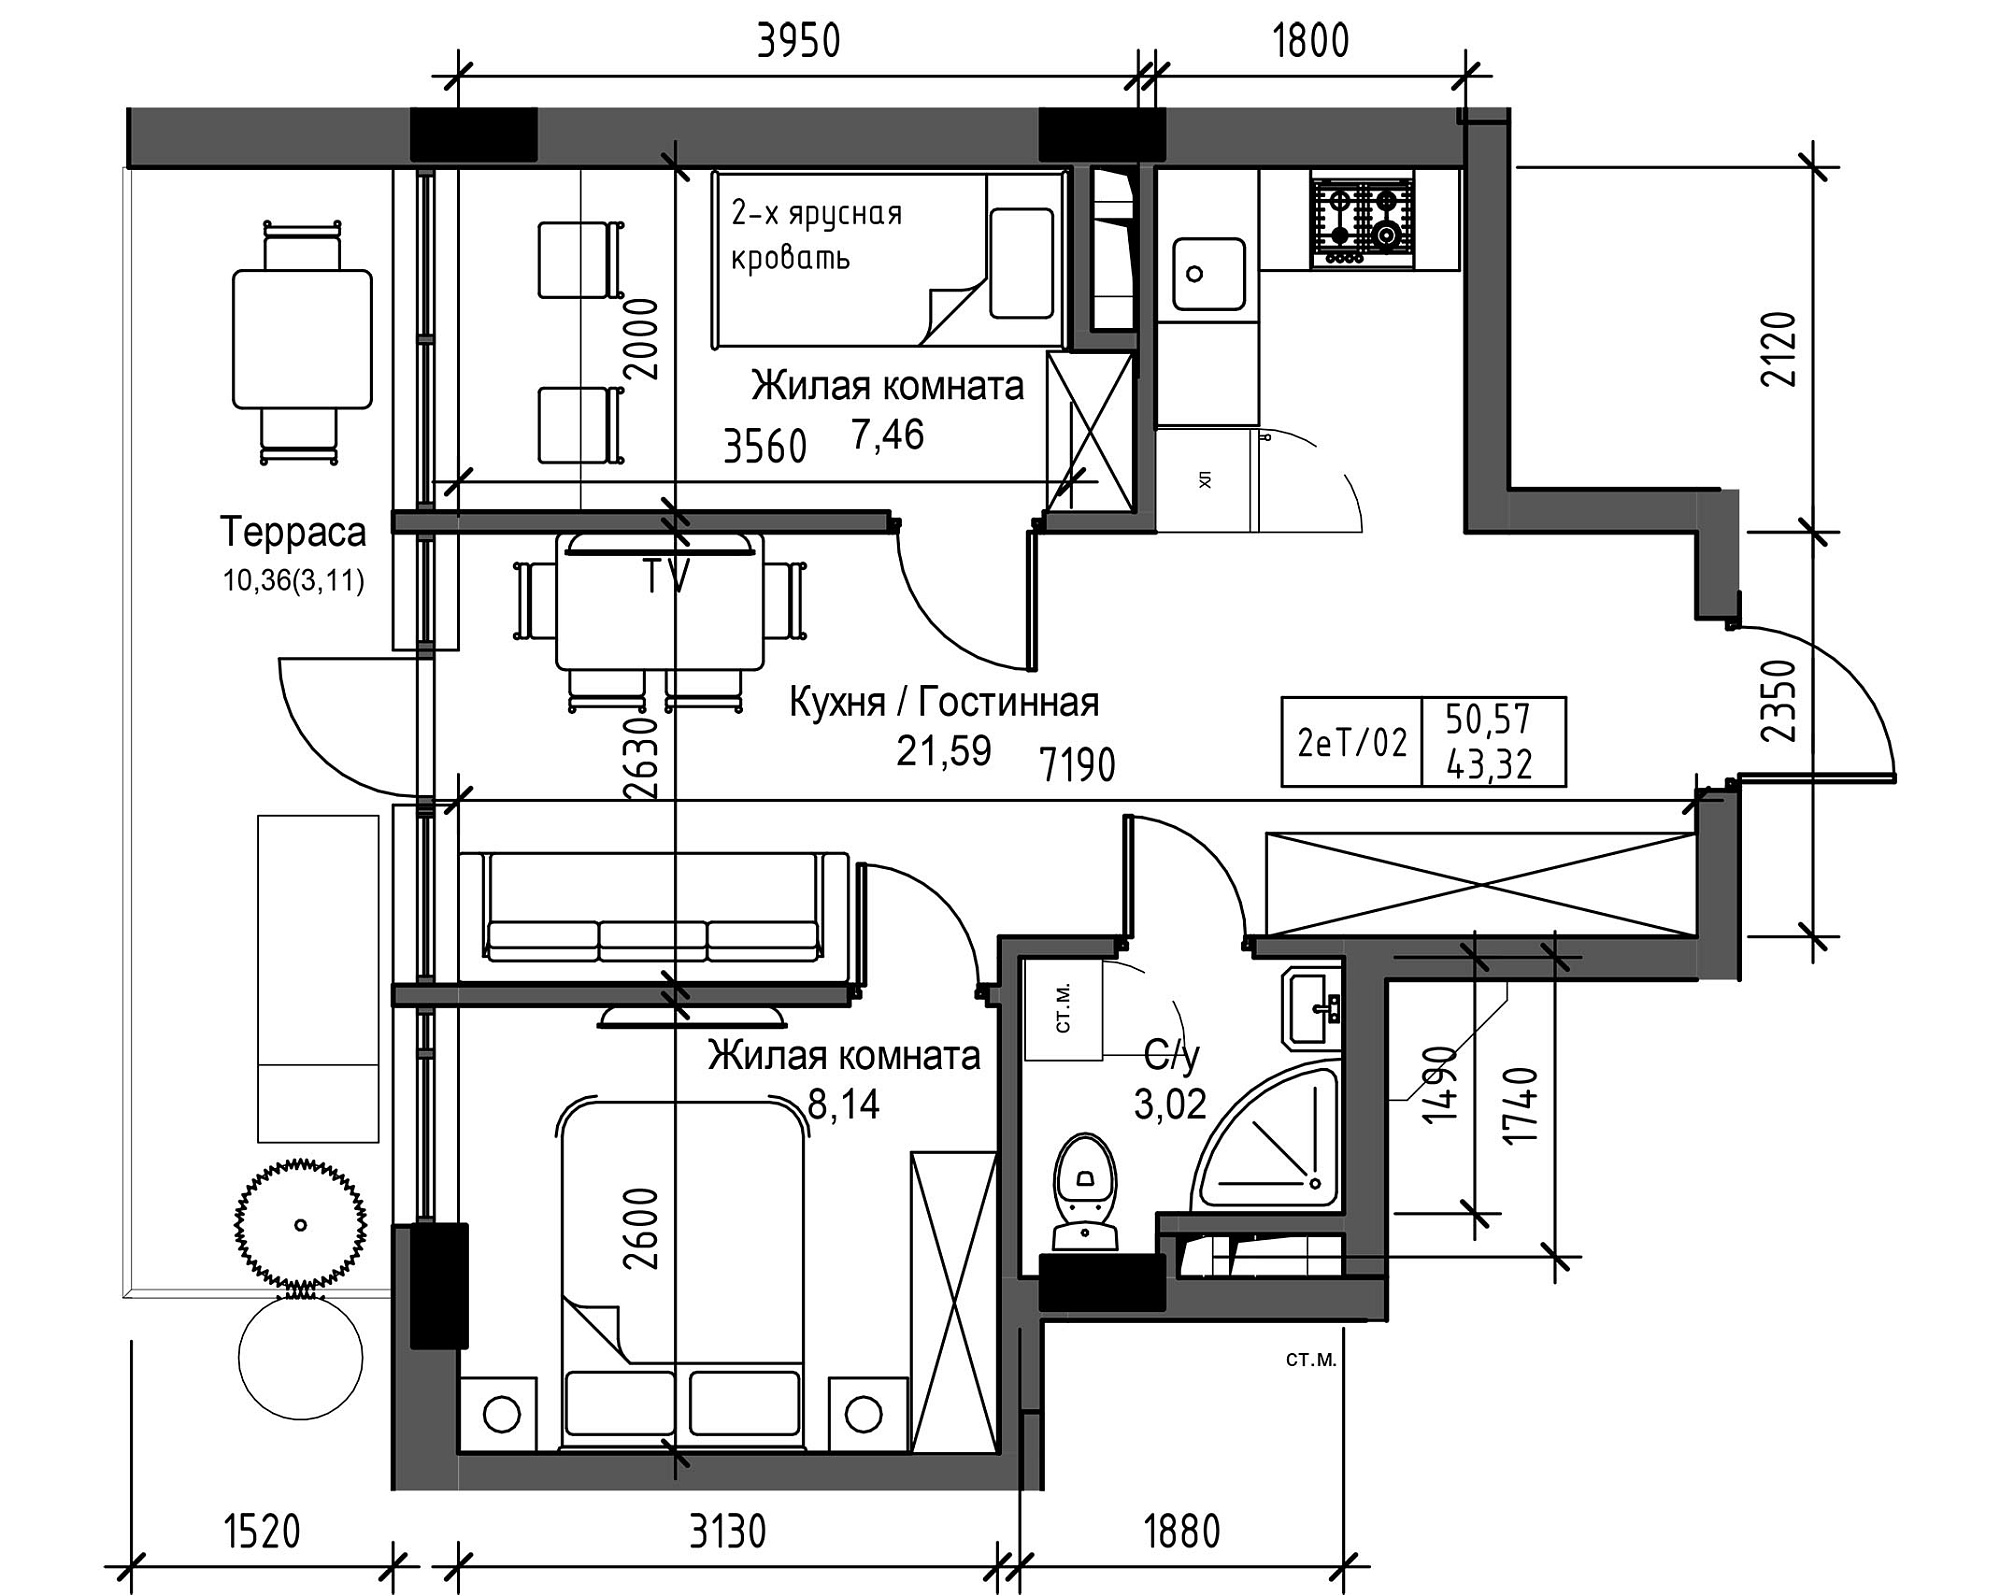 Planning 2-rm flats area 43.32m2, UM-003-08/0086.